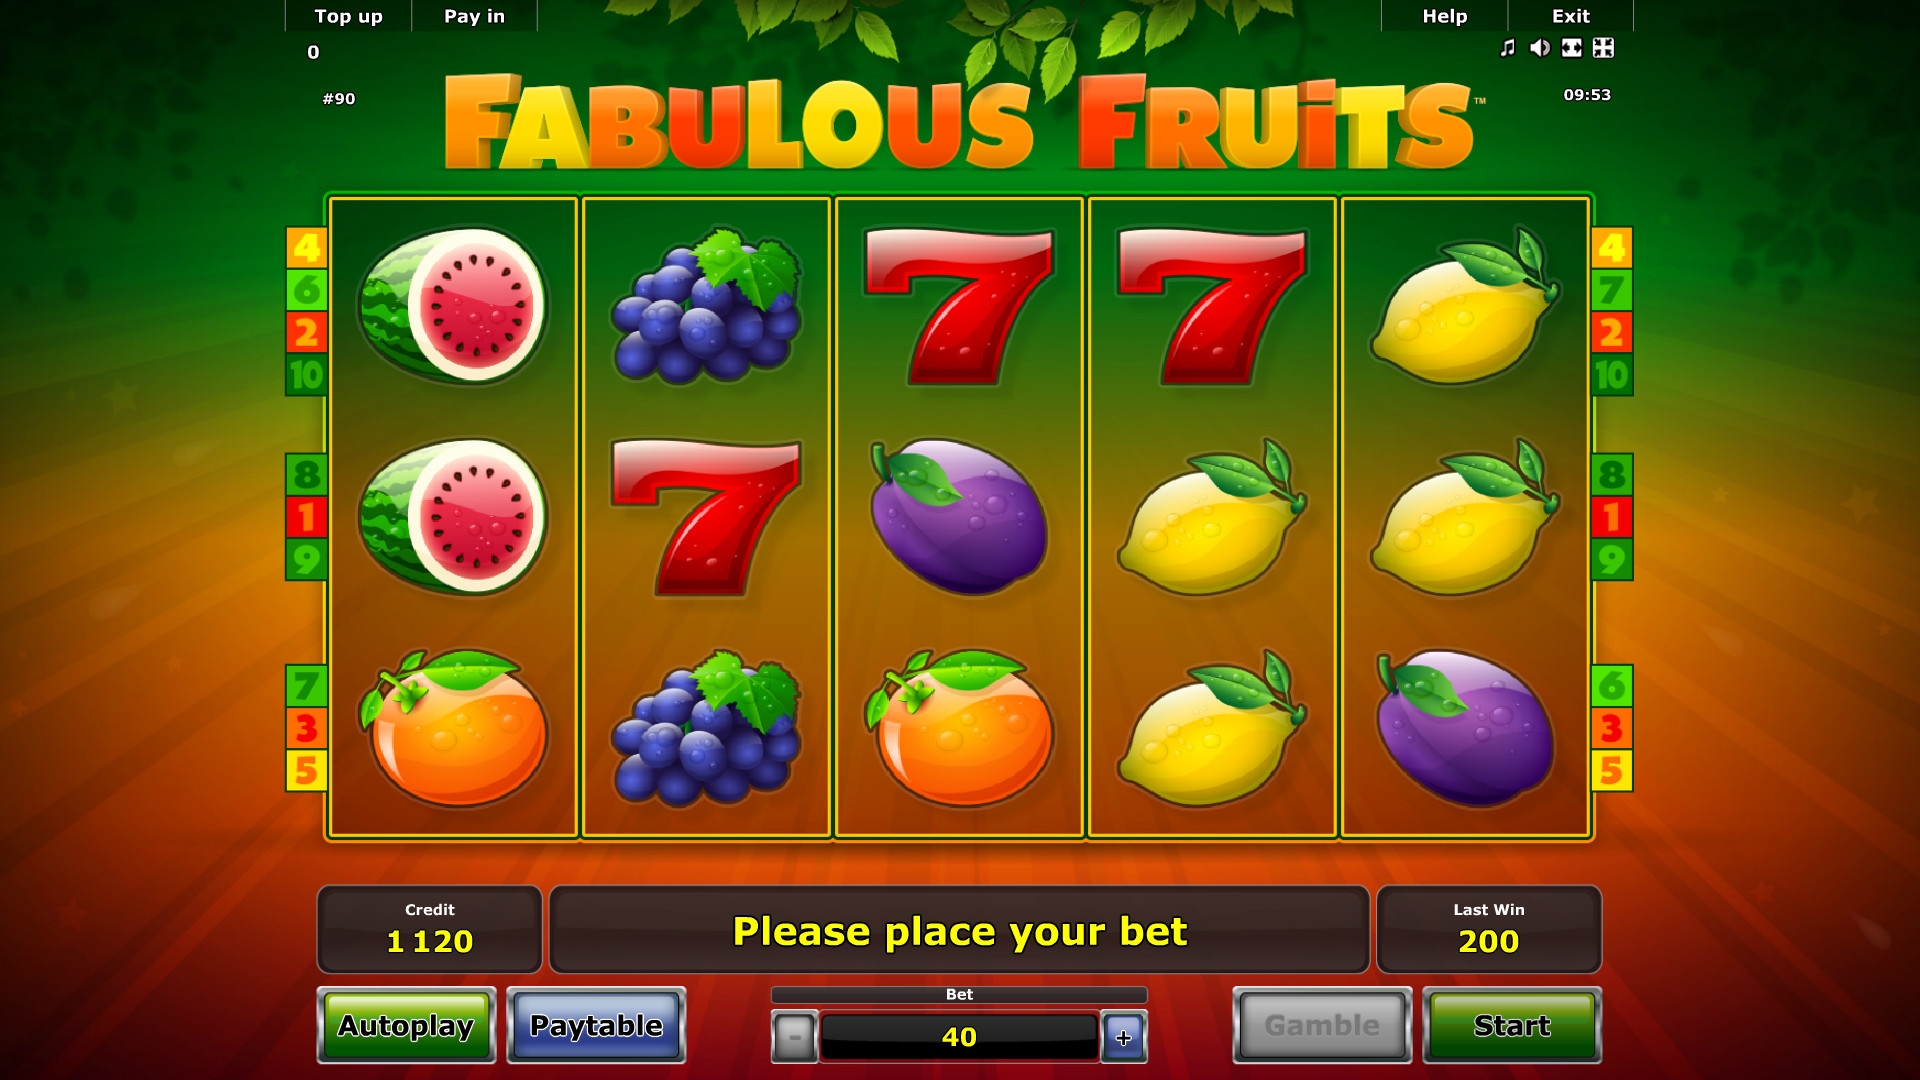 Fabulous Fruits (Fabulous Fruits) from category Slots